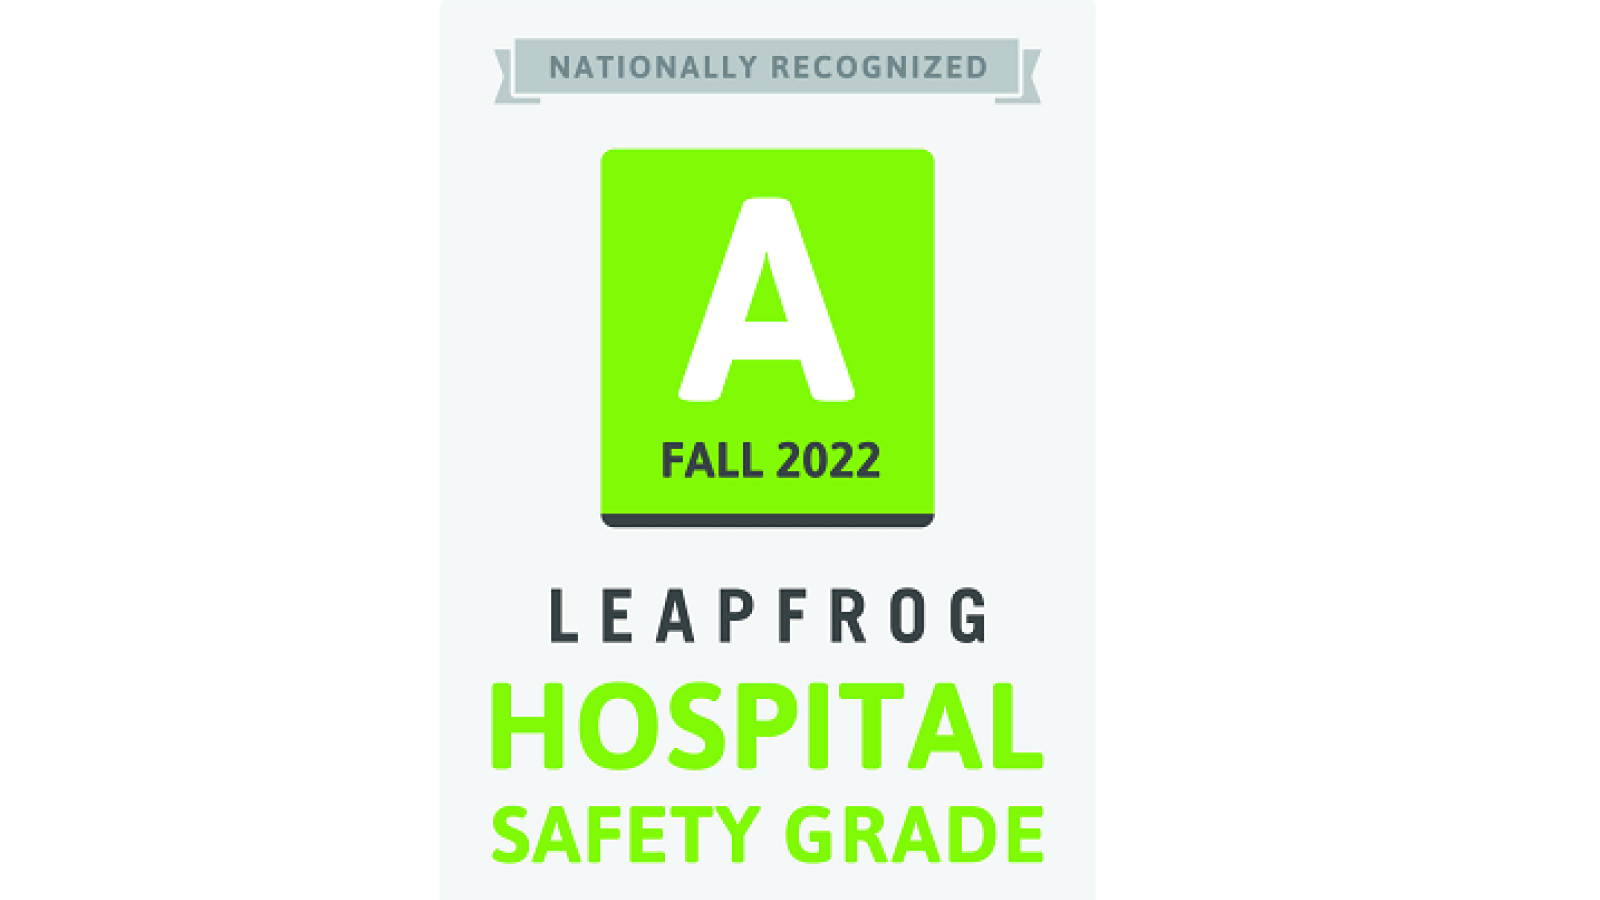 Guthrie Corning Hospital Awarded Top Hospital Safety Grade